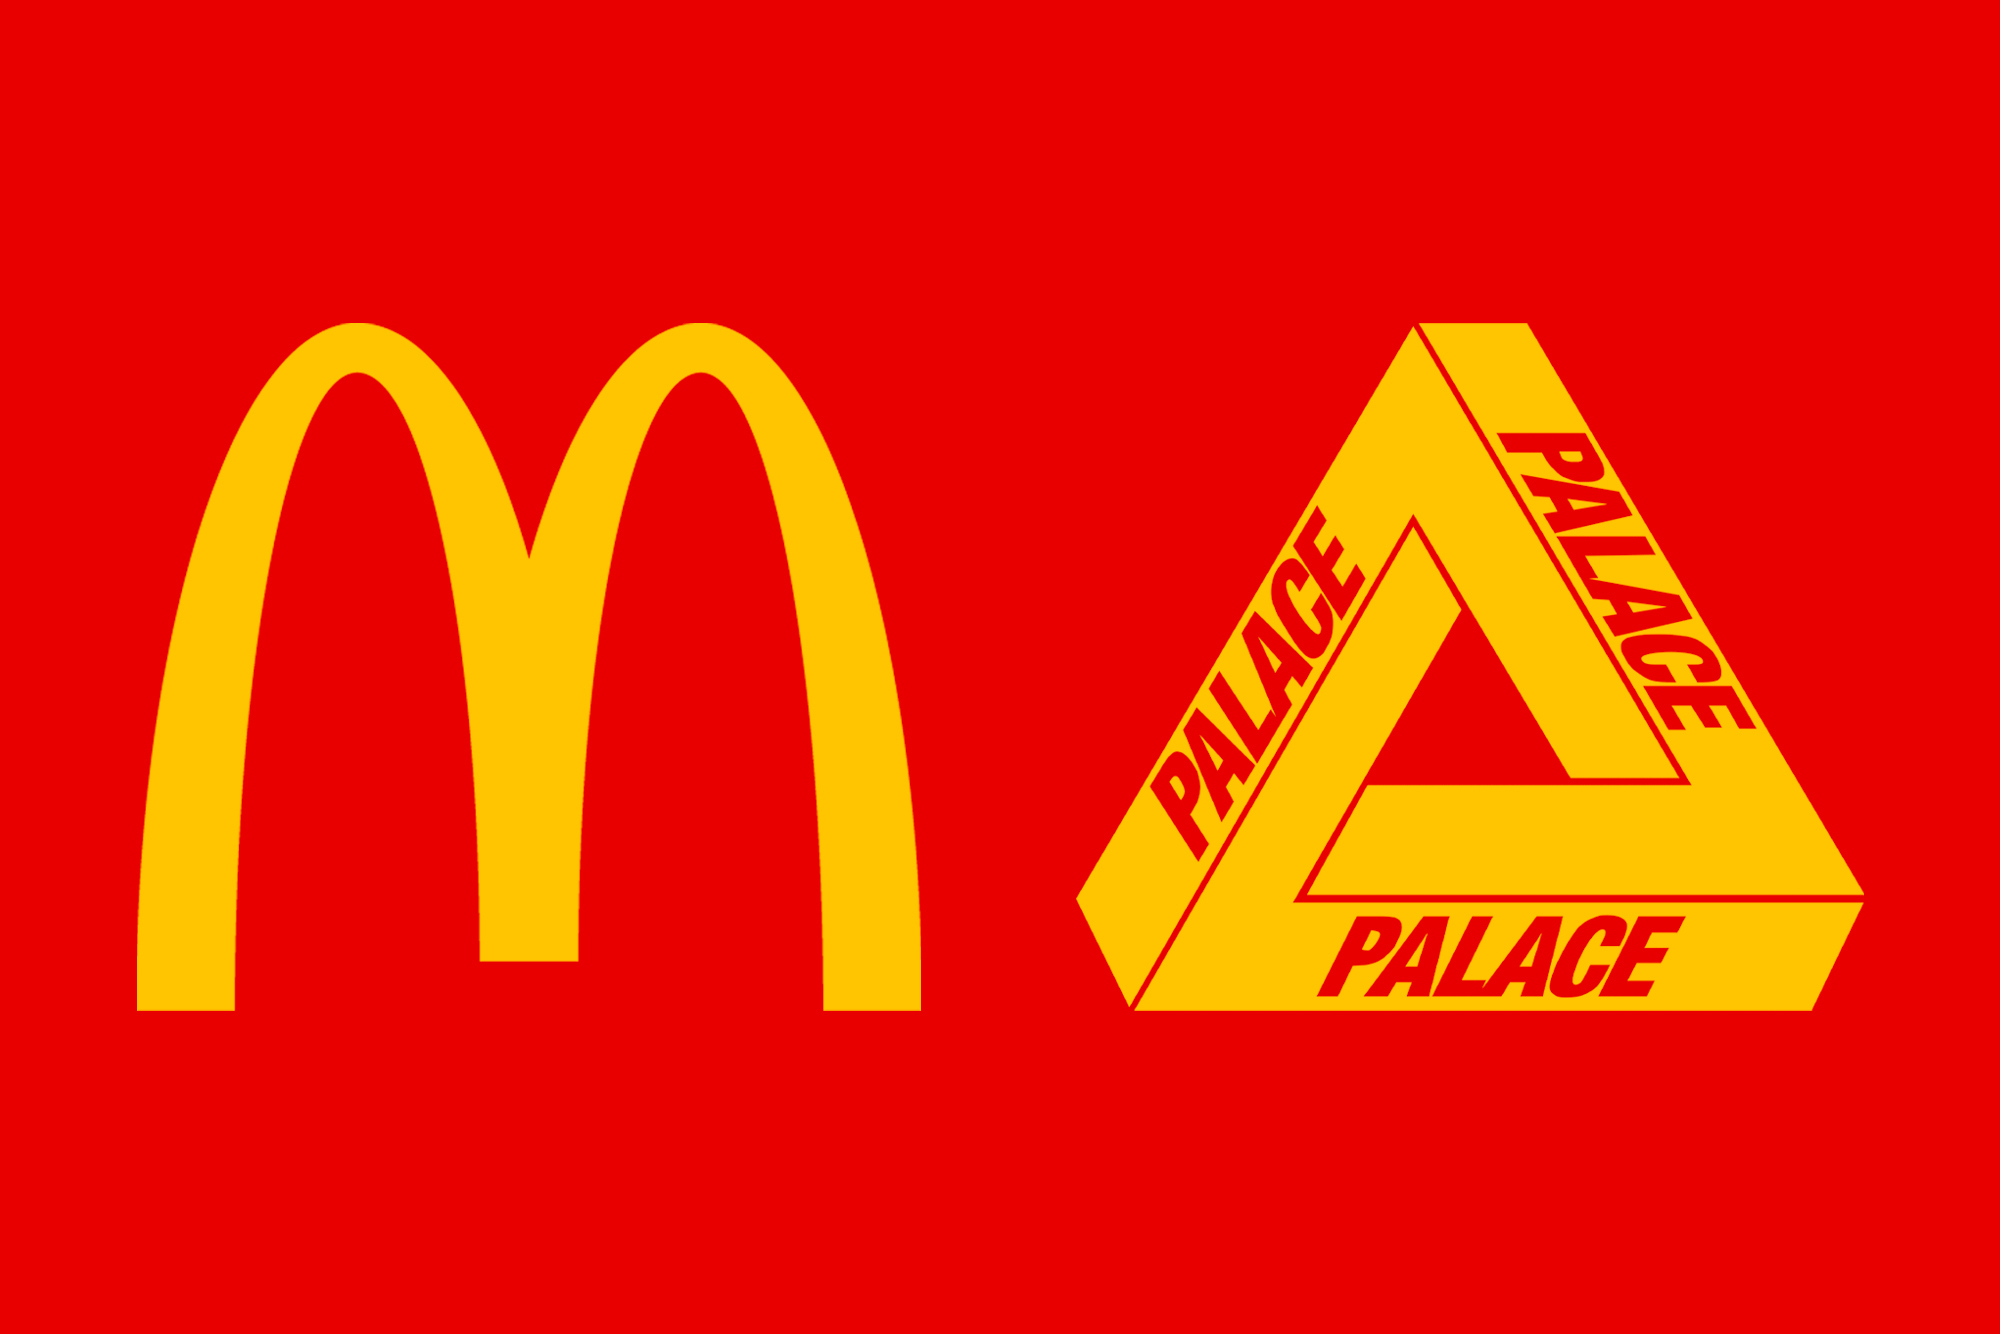 Everything to Know: Palace x McDonald's, 